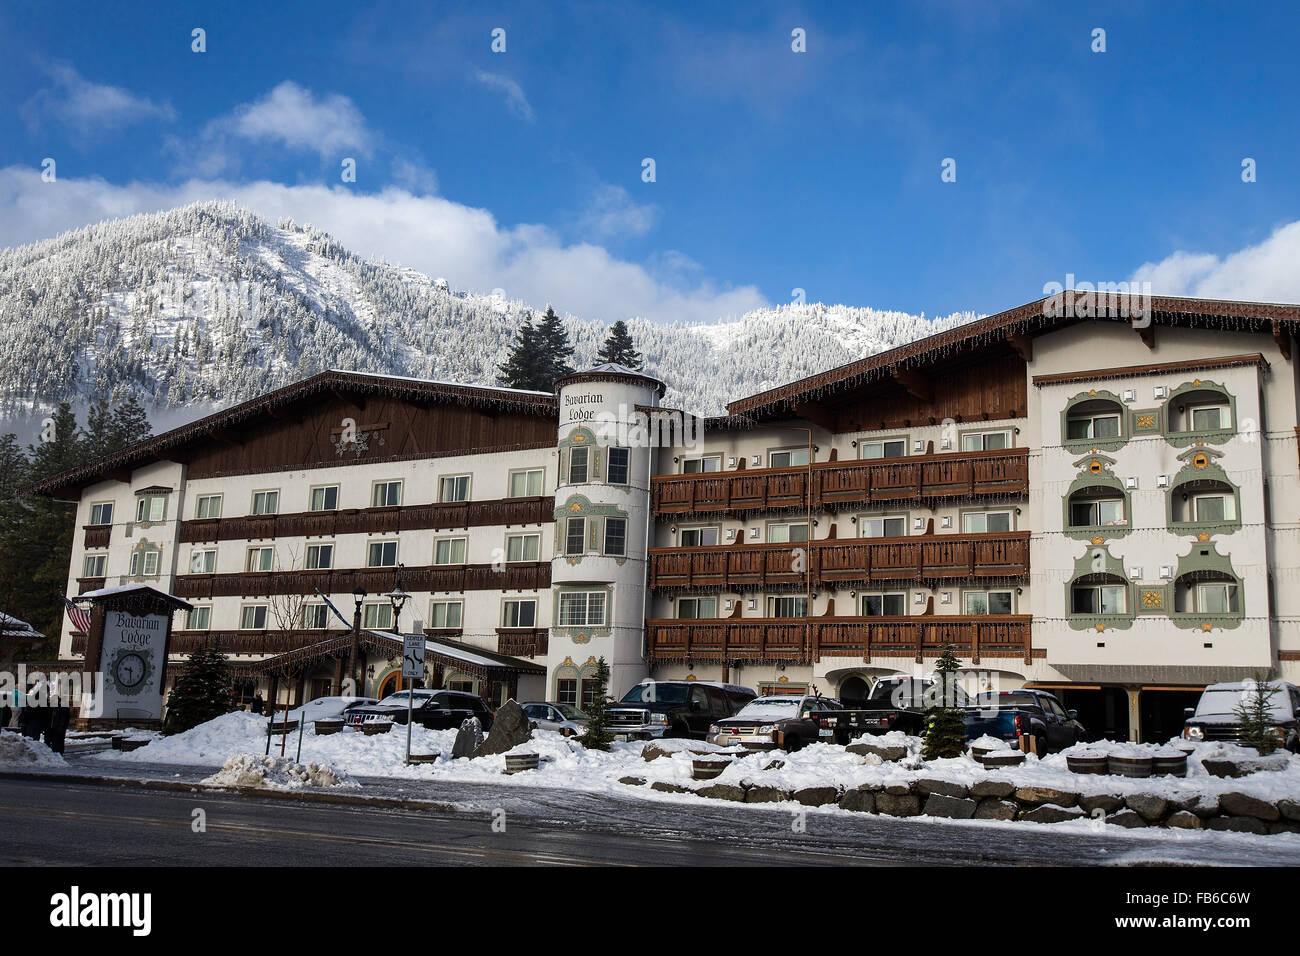 Bavarian Lodge with snow, Leavenworth, Washington, United States of America Stock Photo